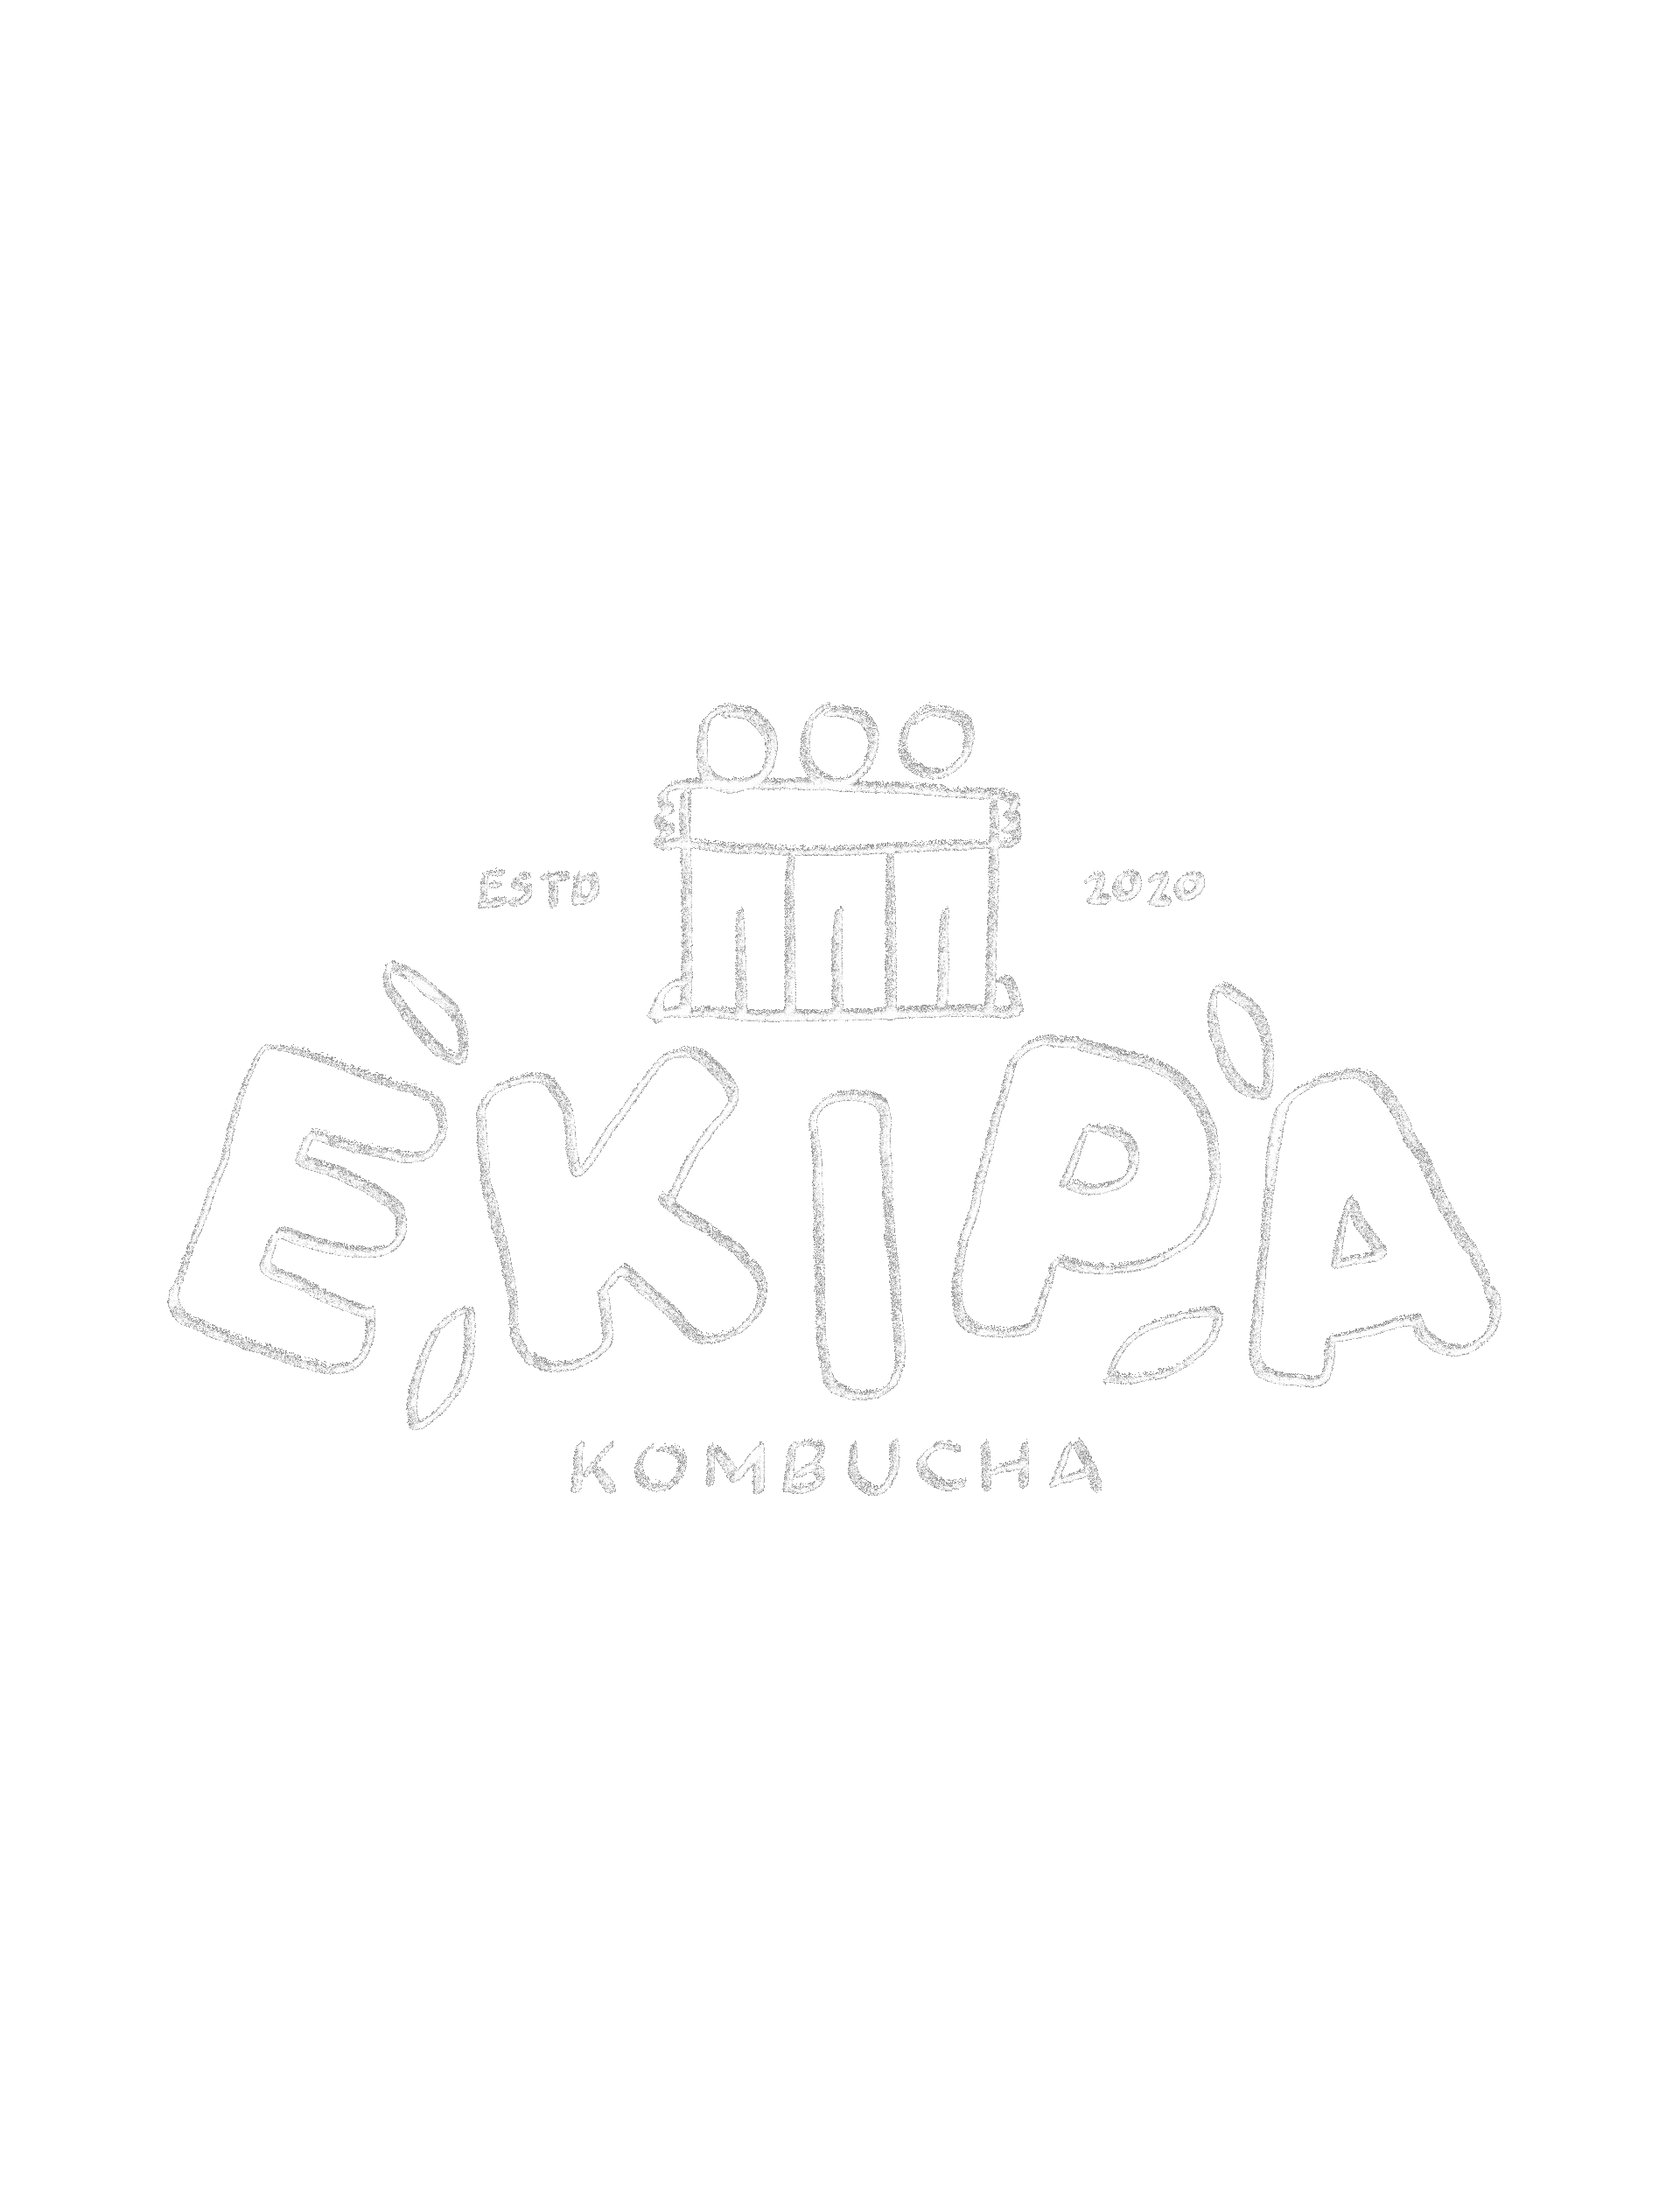 Hrvatska - stickers – EKIPA